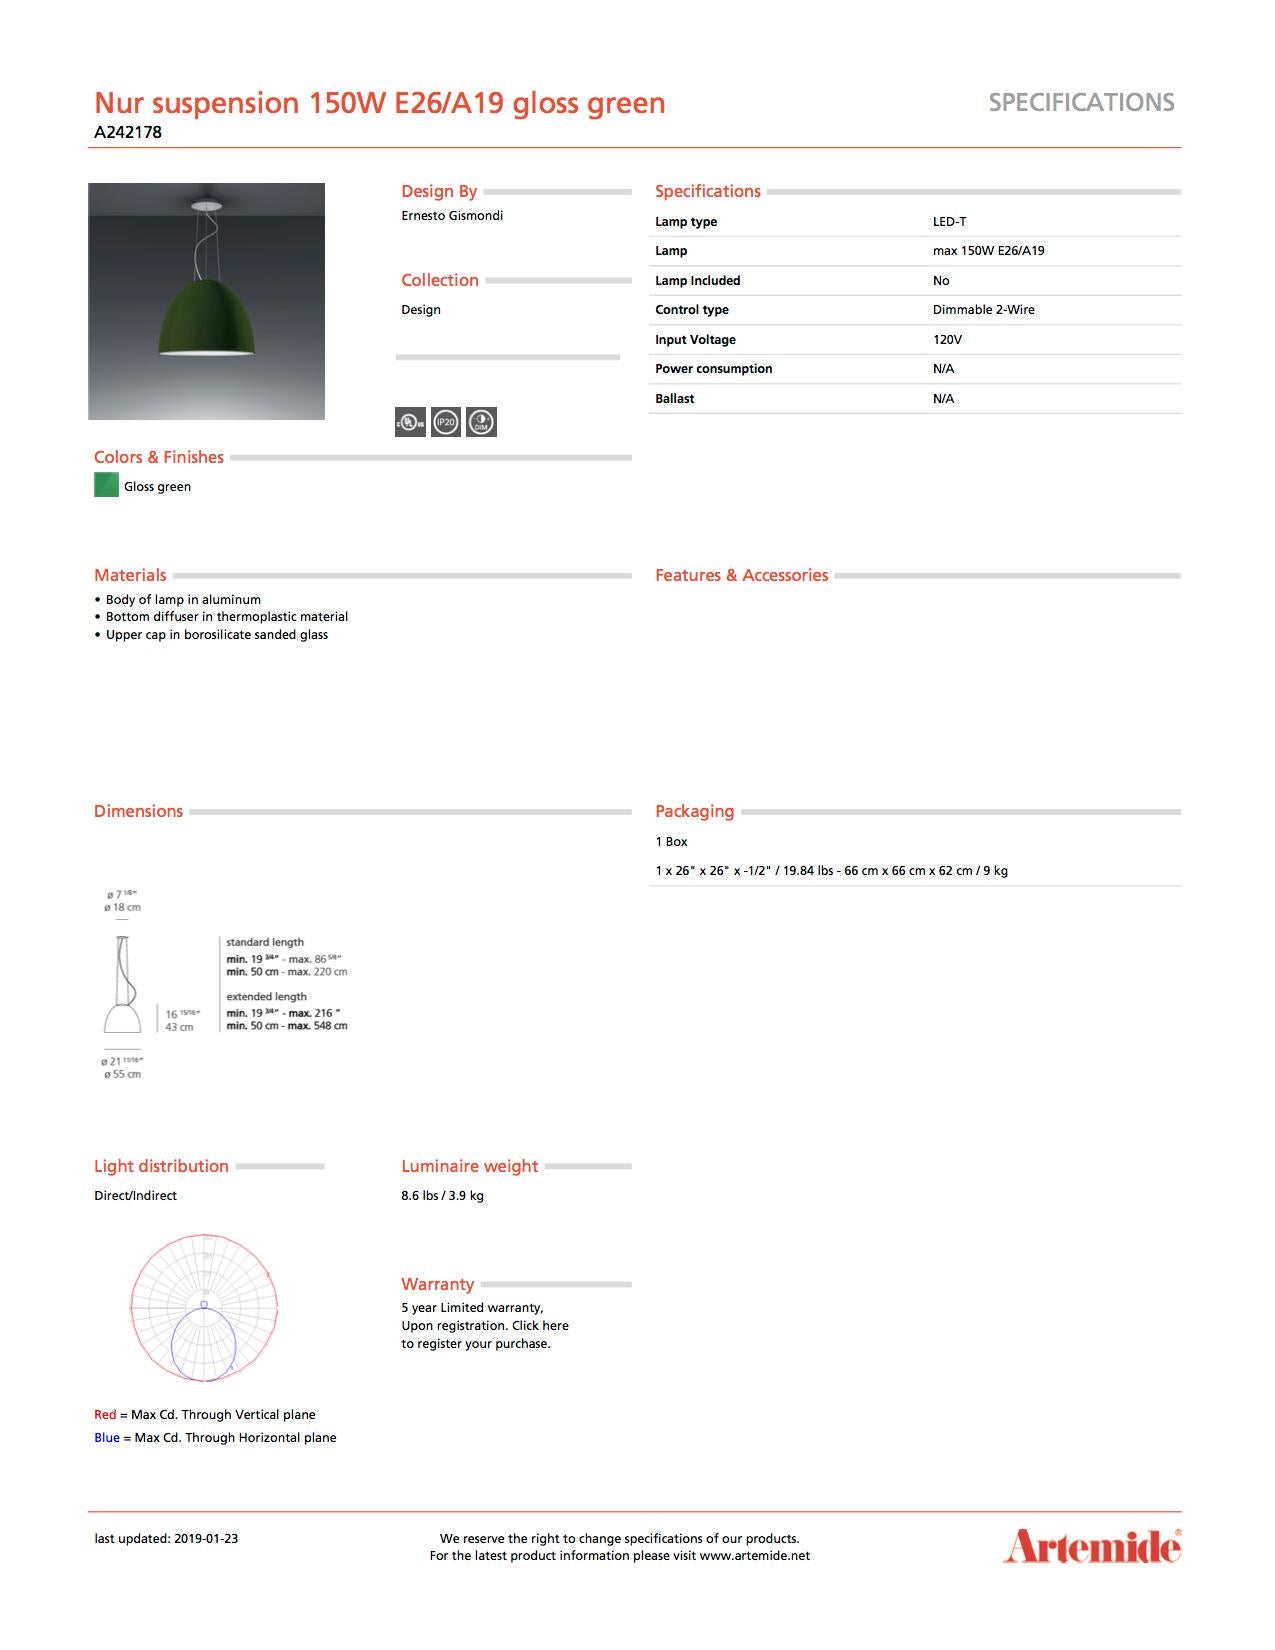 Italian Artemide Nur Suspension Light 150W E26/A19 in Gloss Green For Sale